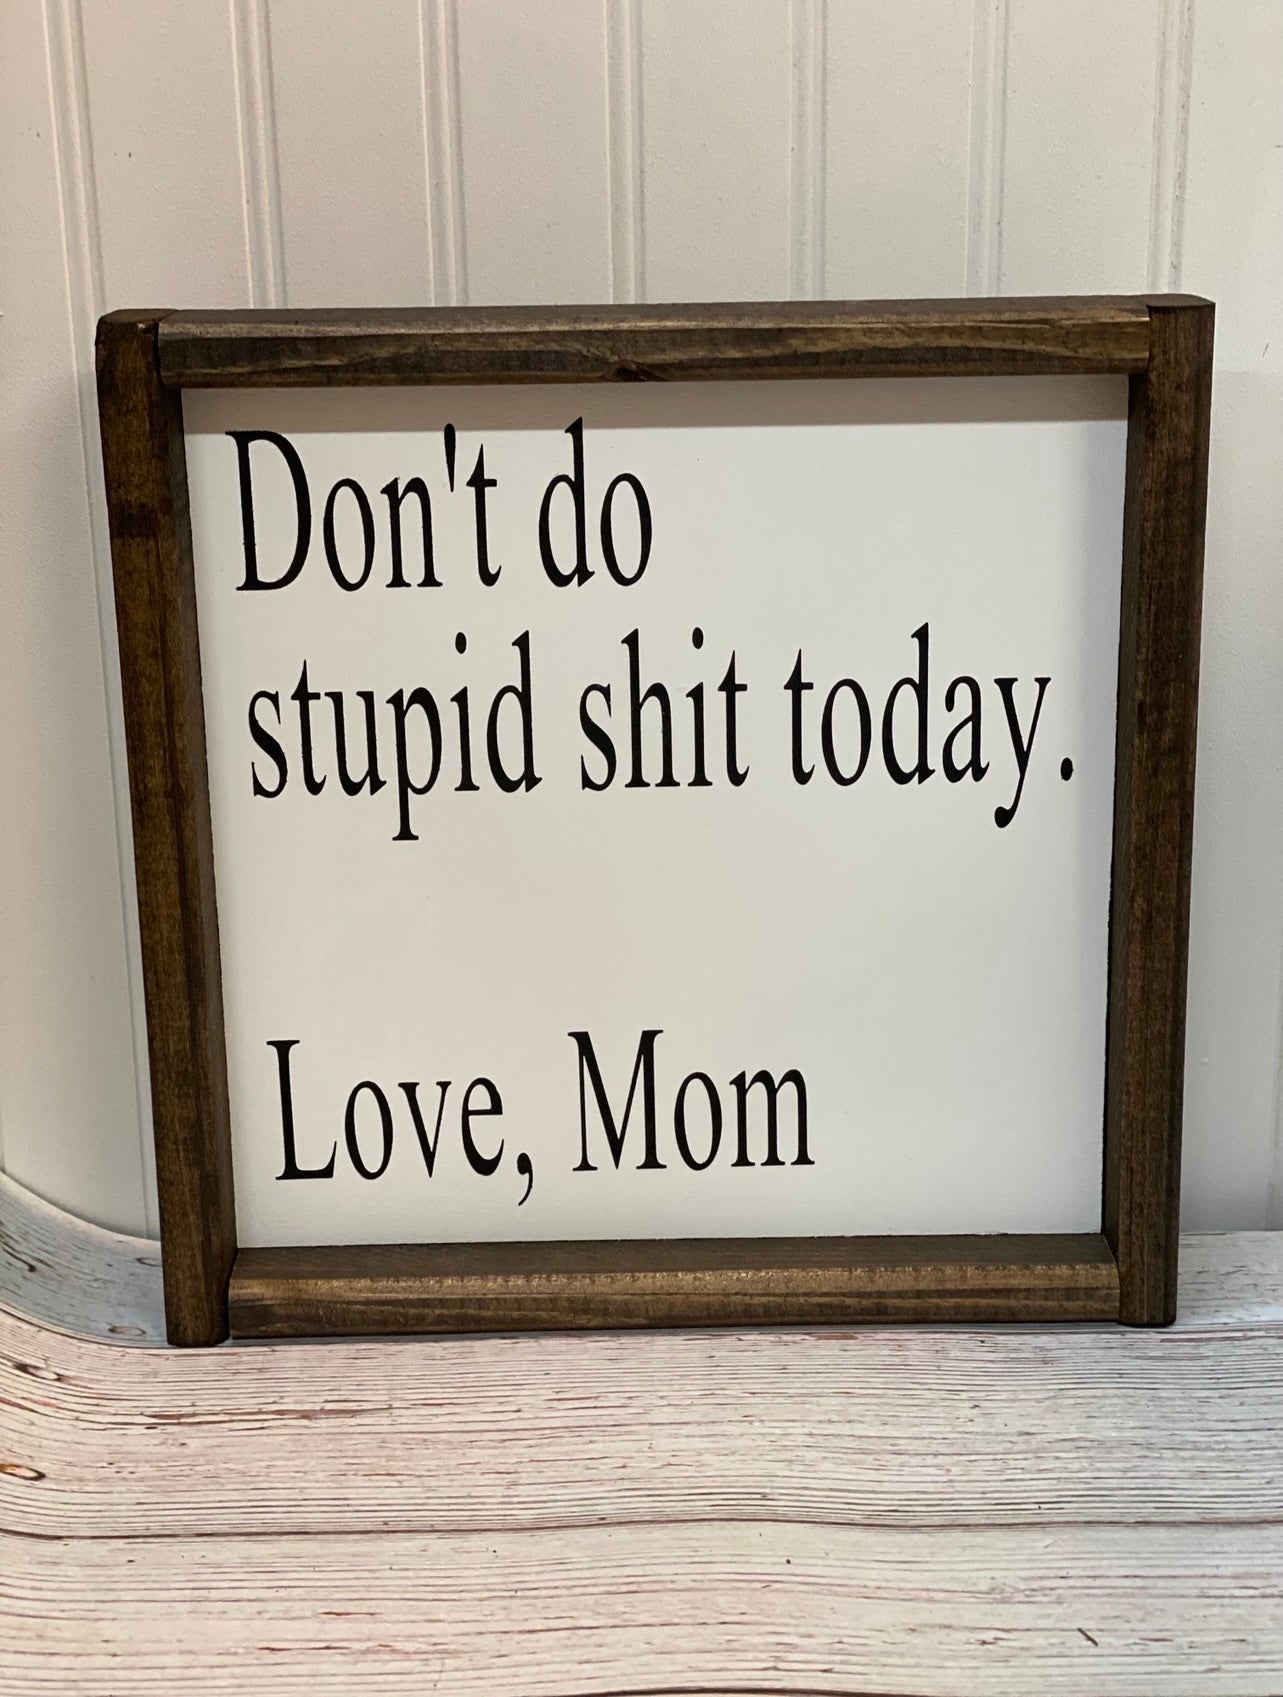  Don't Do Stupid Shit Love Mom Bracelet, From Mom, For